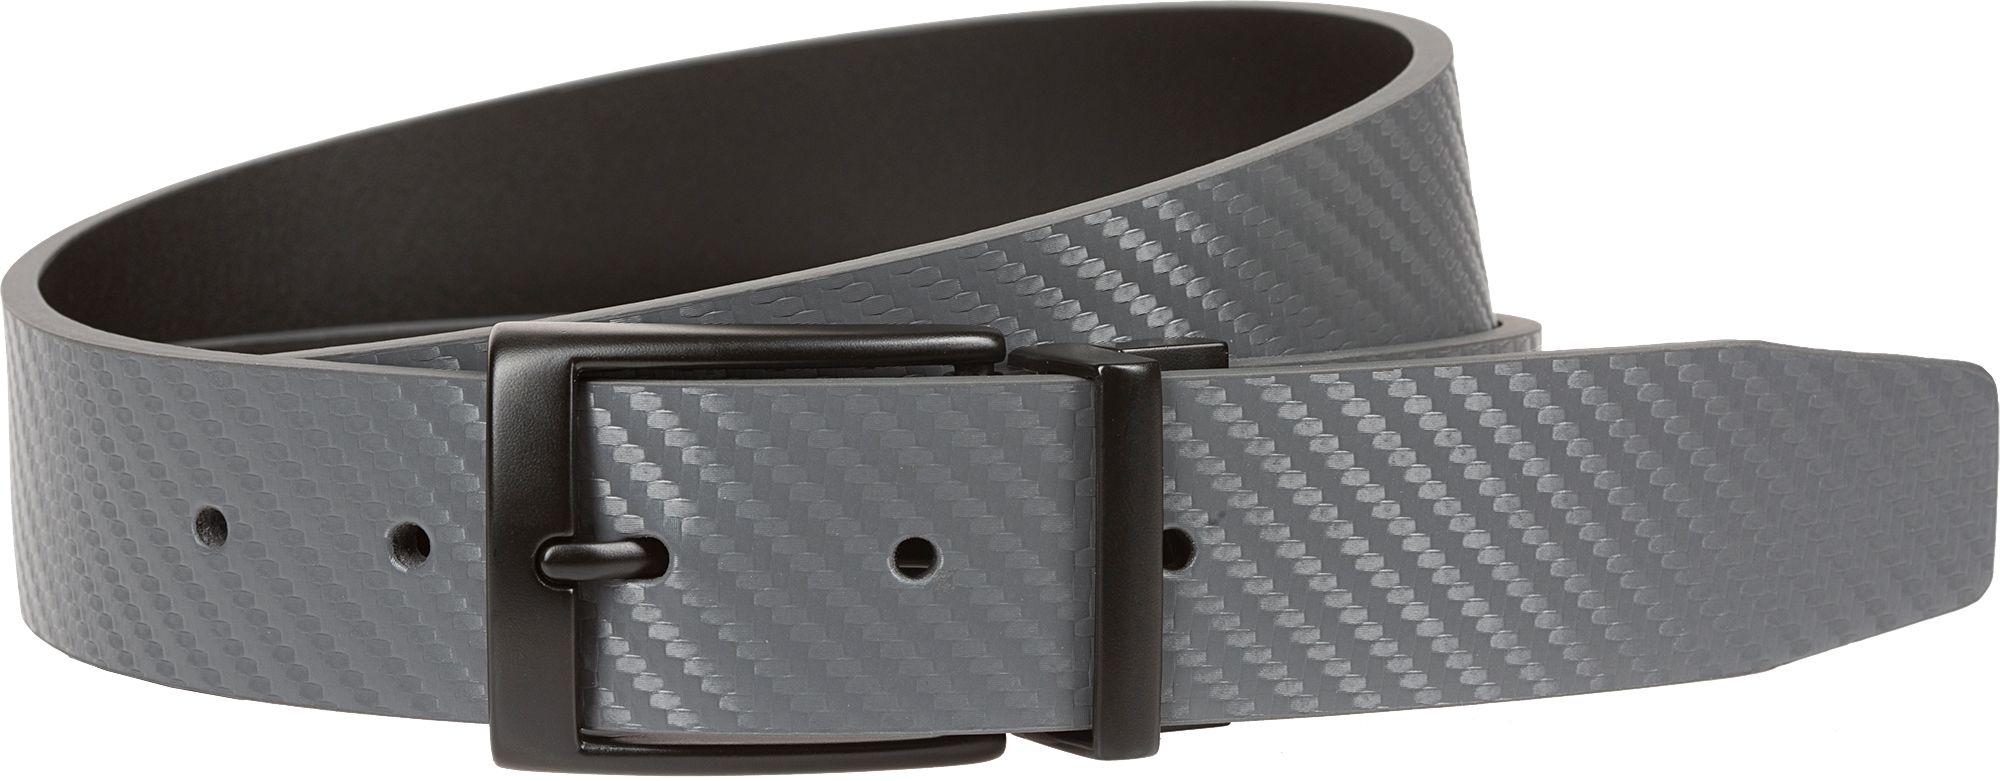 Nike Leather Carbon Fiber Matte Reversible Golf Belt in Grey/Black (Gray)  for Men - Lyst